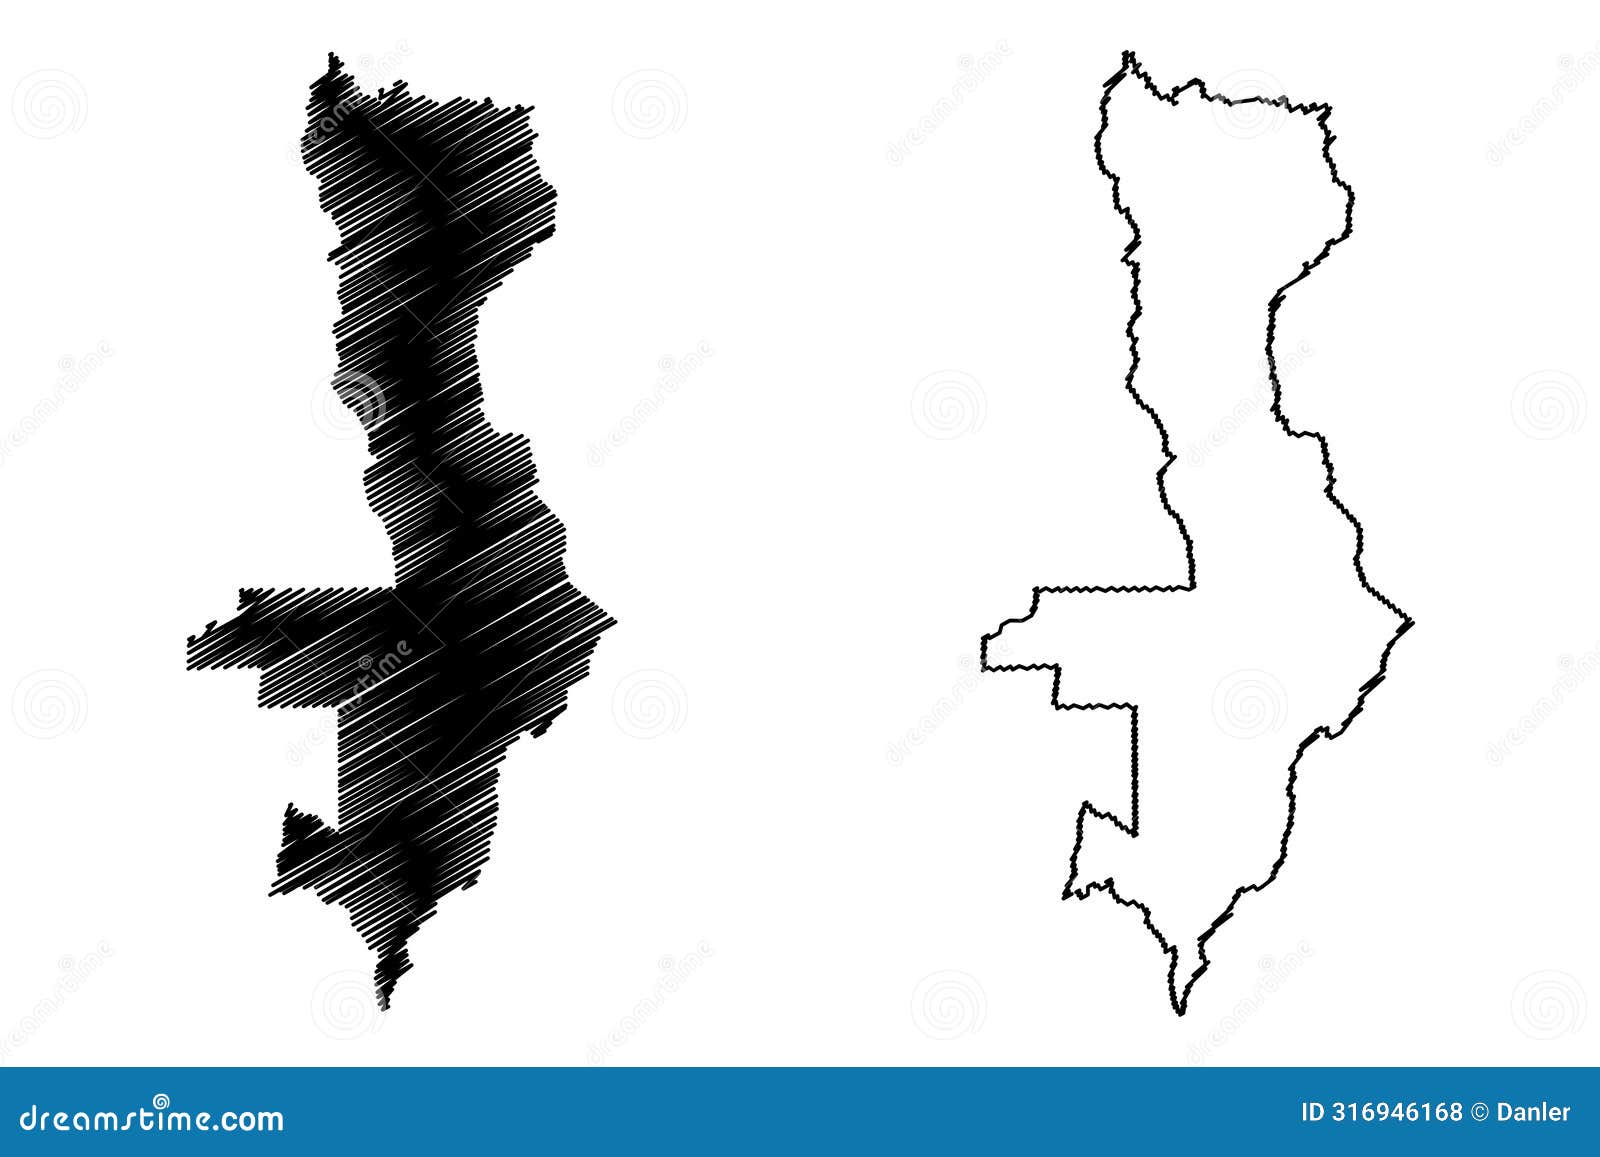 vilhena municipality (state of rondÃÂ´nia or rondonia, ro, municipalities of brazil, federative republic of brazil) map